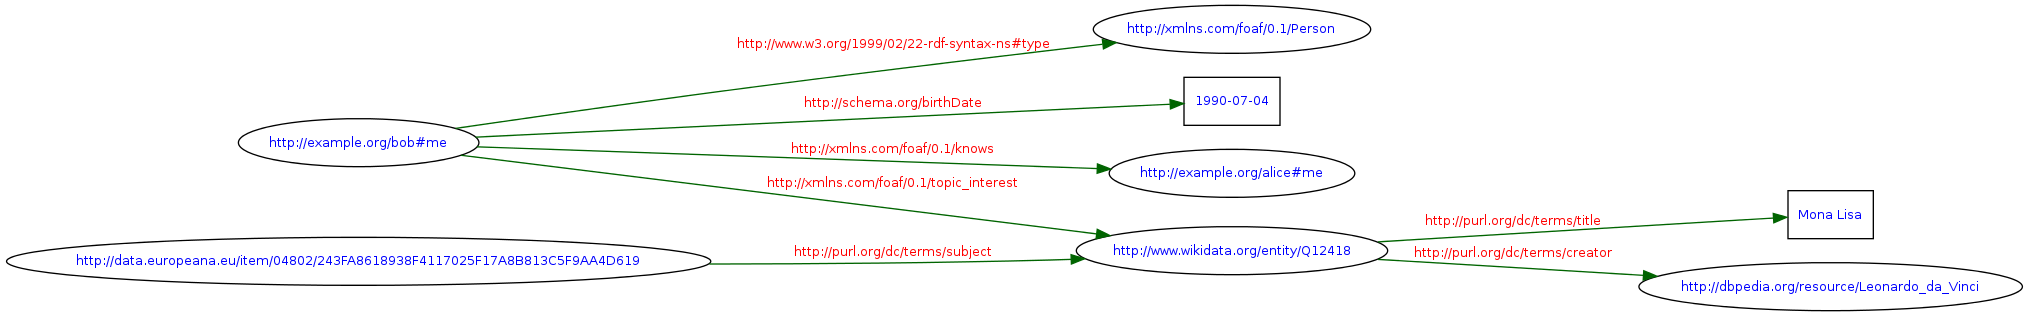 pl:dydaktyka:semweb:rdf-primer-validator-graph.png